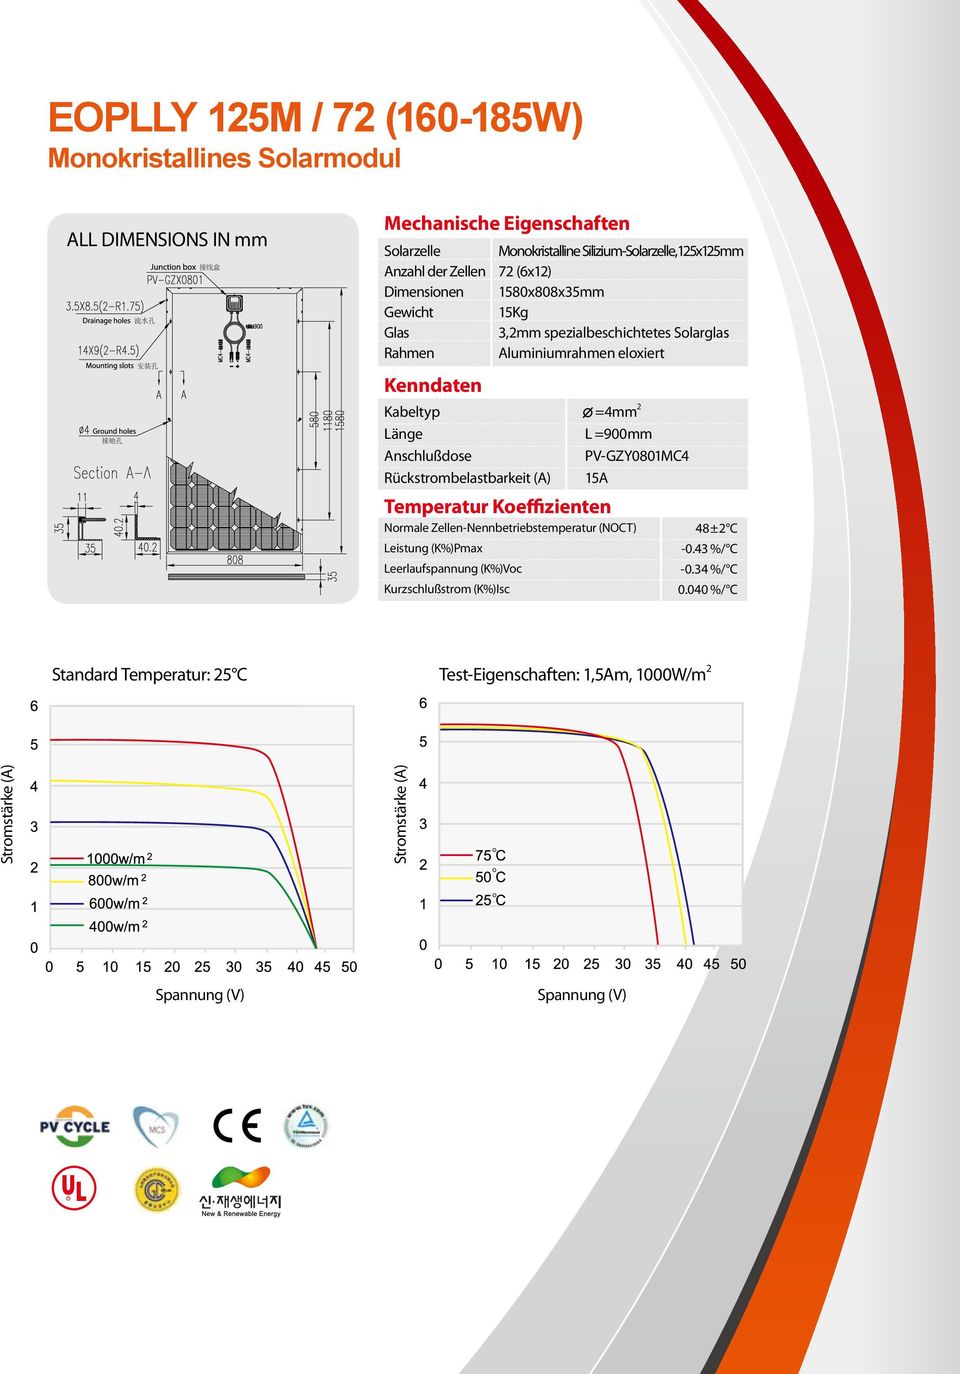 Solarglas Aluminiumrahmen eloxiert Temperatur Koeffizienten =4mm 2 L =900mm PV-GZY0801MC4 15A Normale Zellen-Nennbetriebstemperatur (NOCT) Leistung